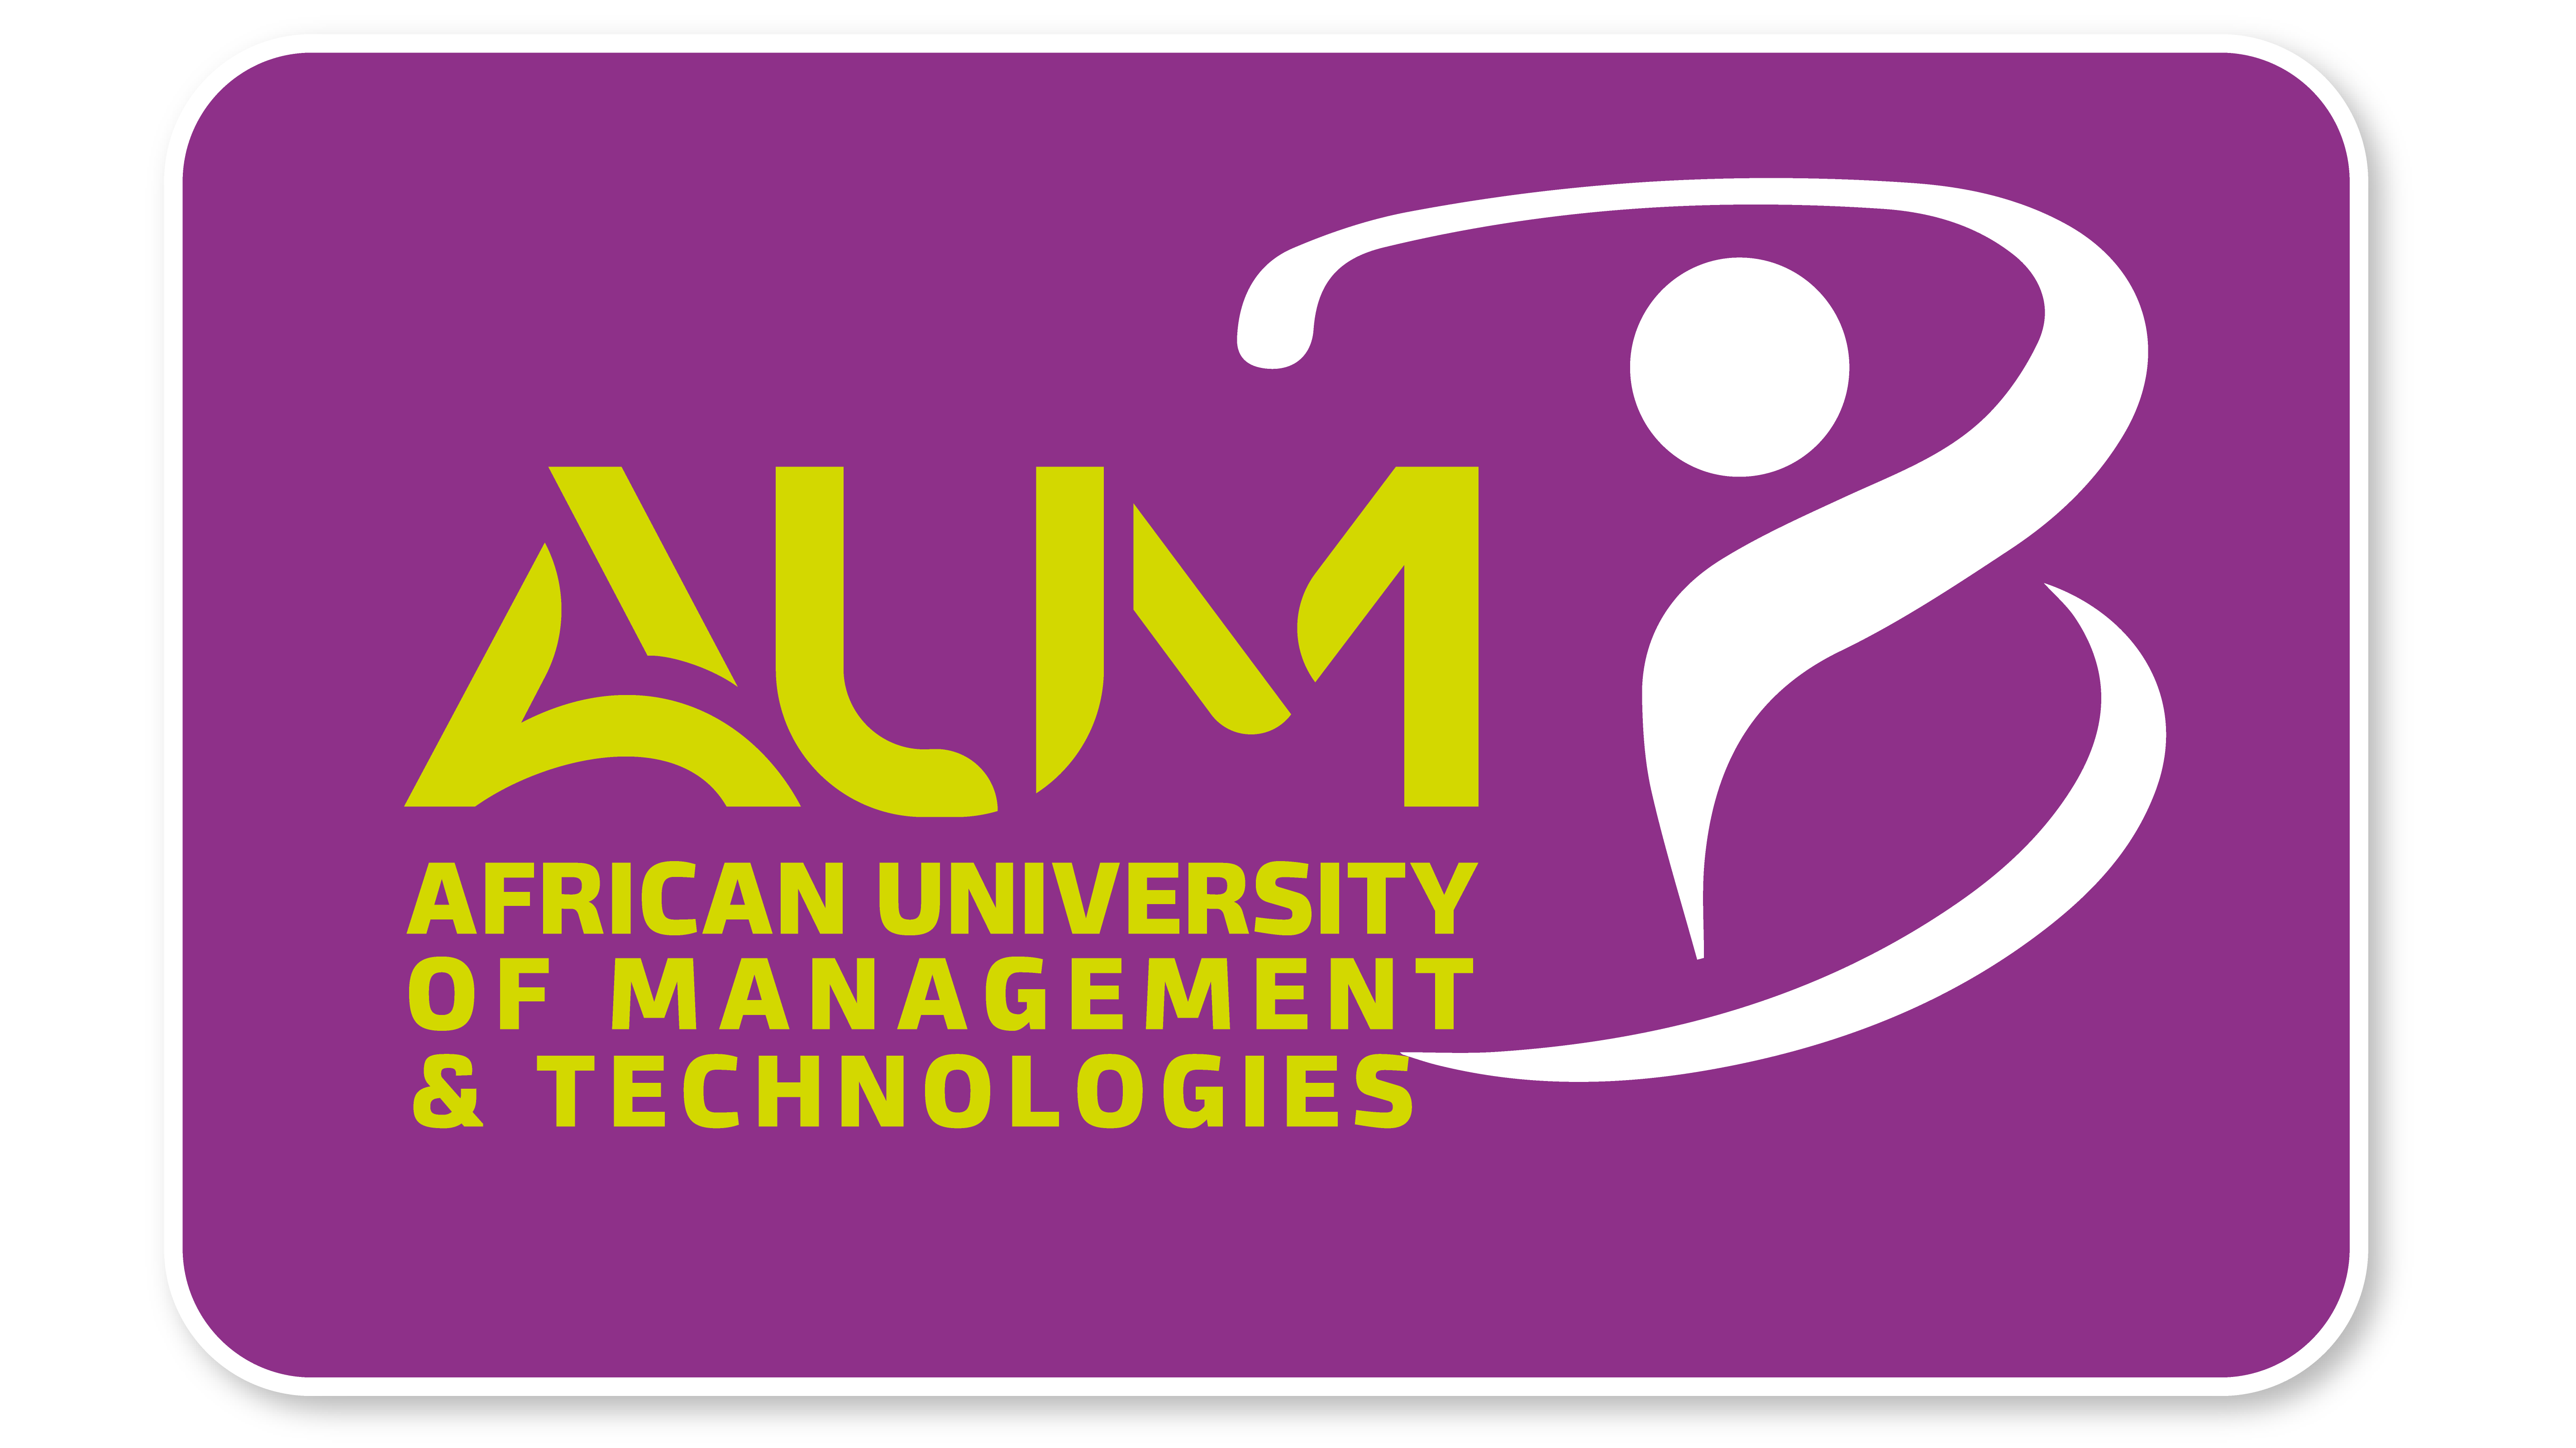 African University of Management & Technologies